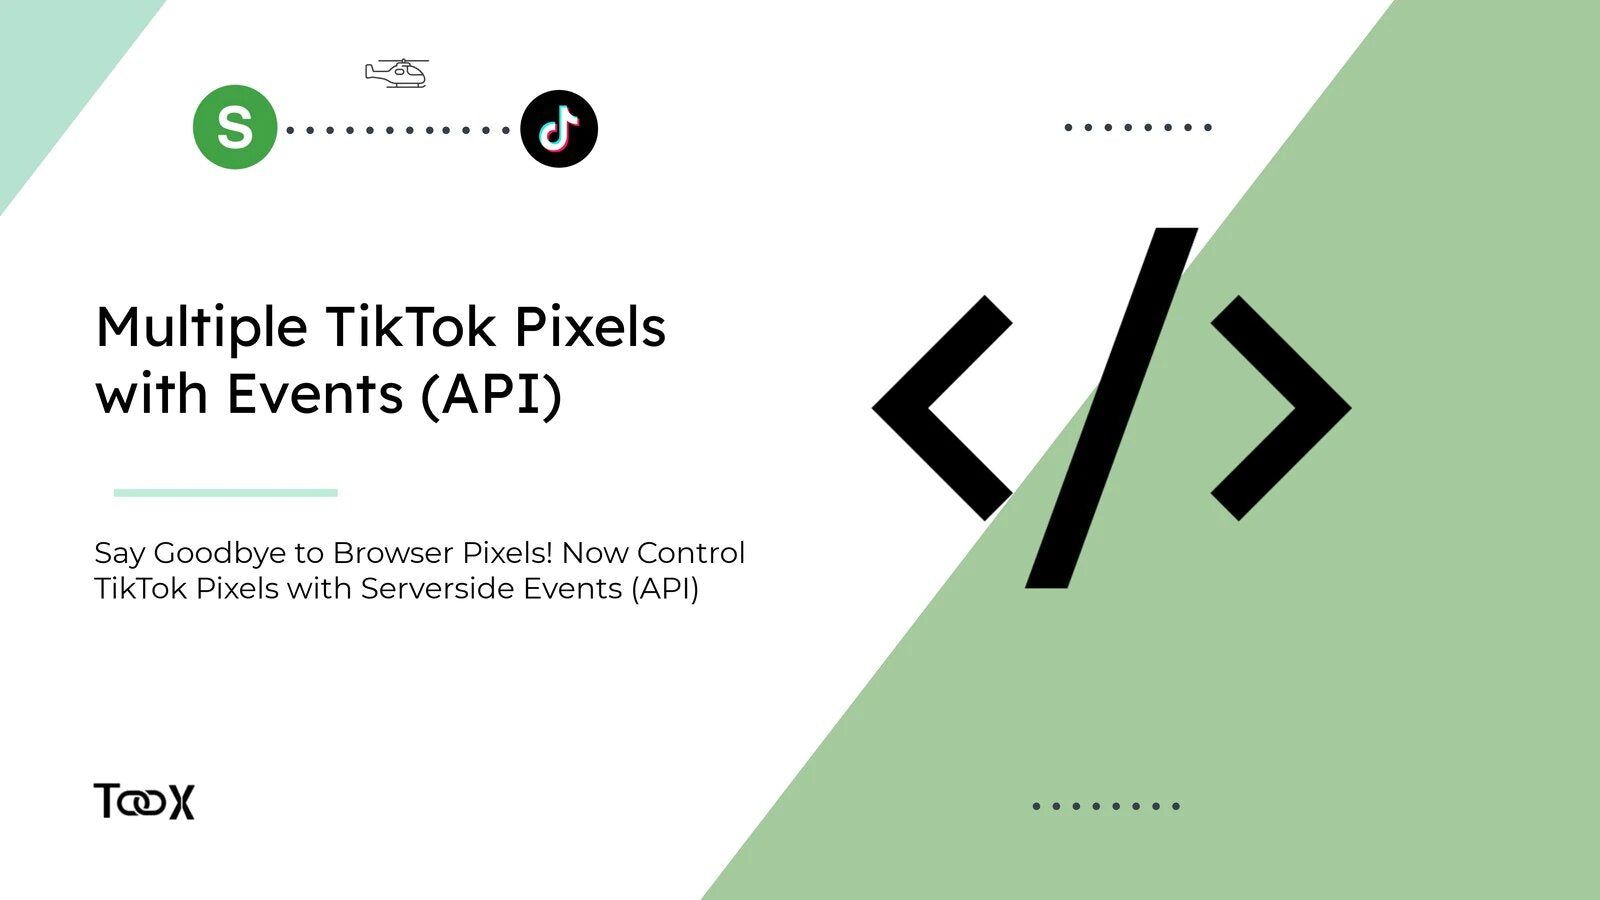 Control TikTok Pixels with Serverside Events API